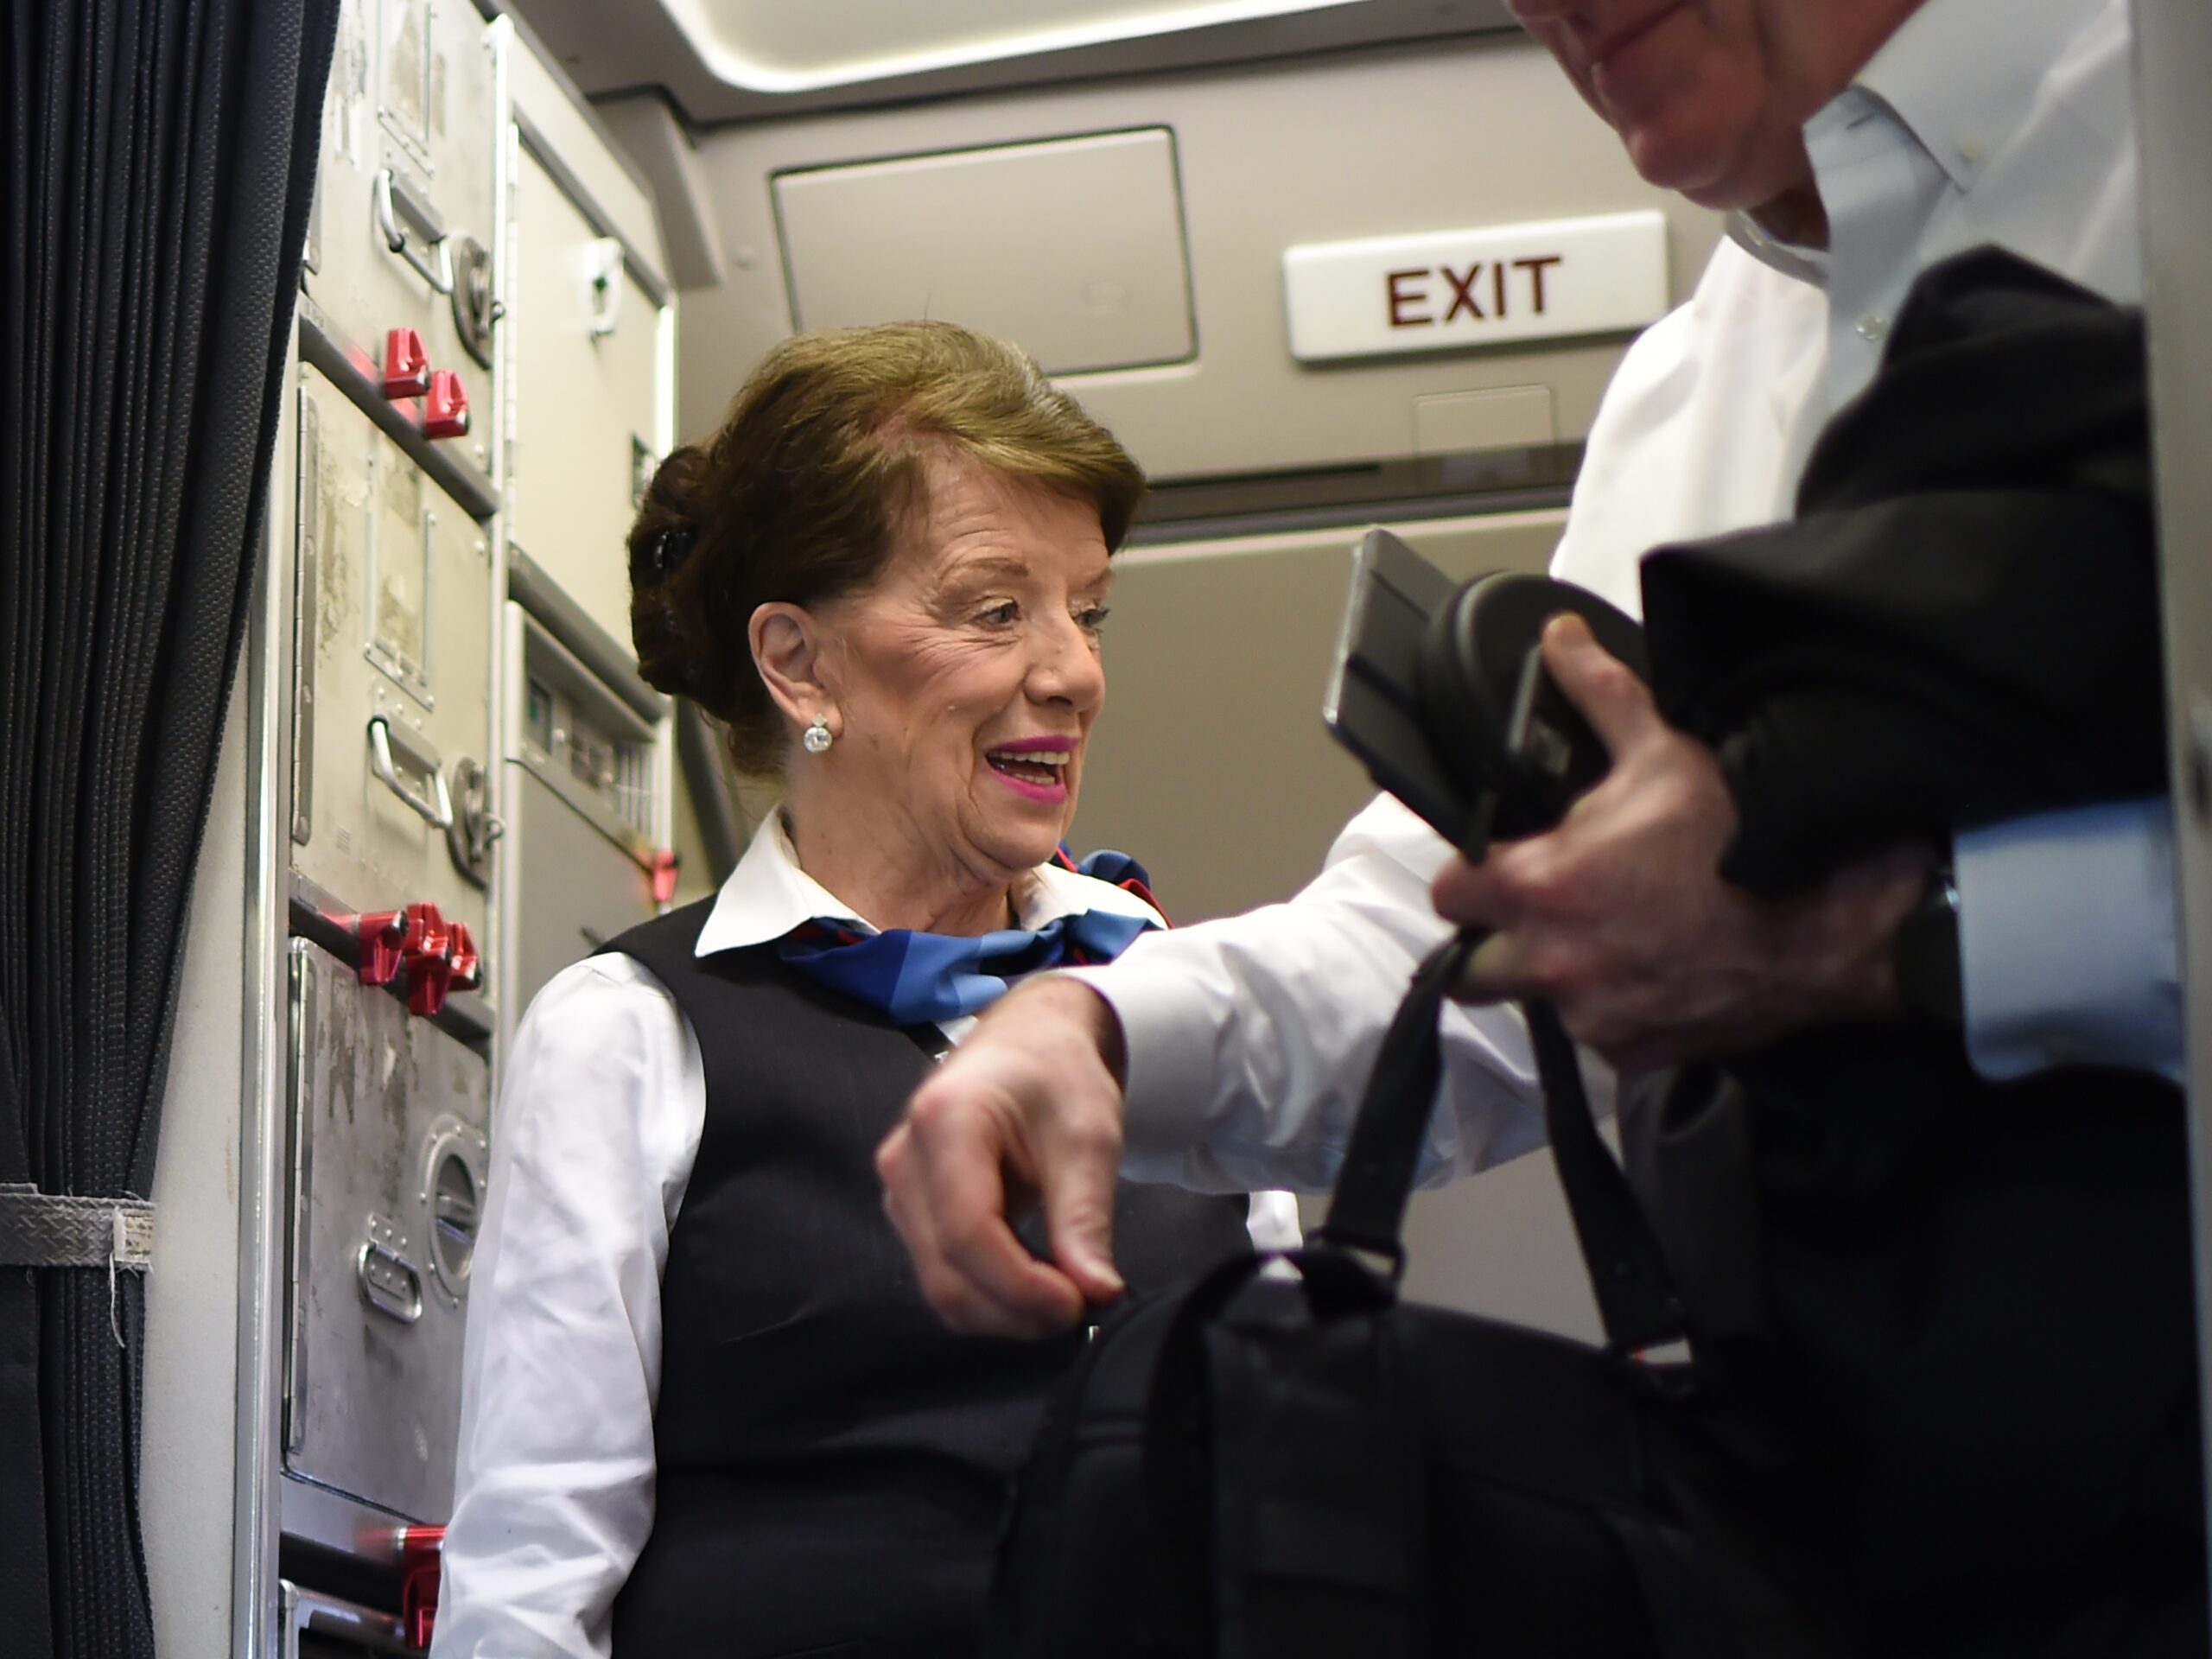 A female flight attendant greets a passenger leaving the plane.